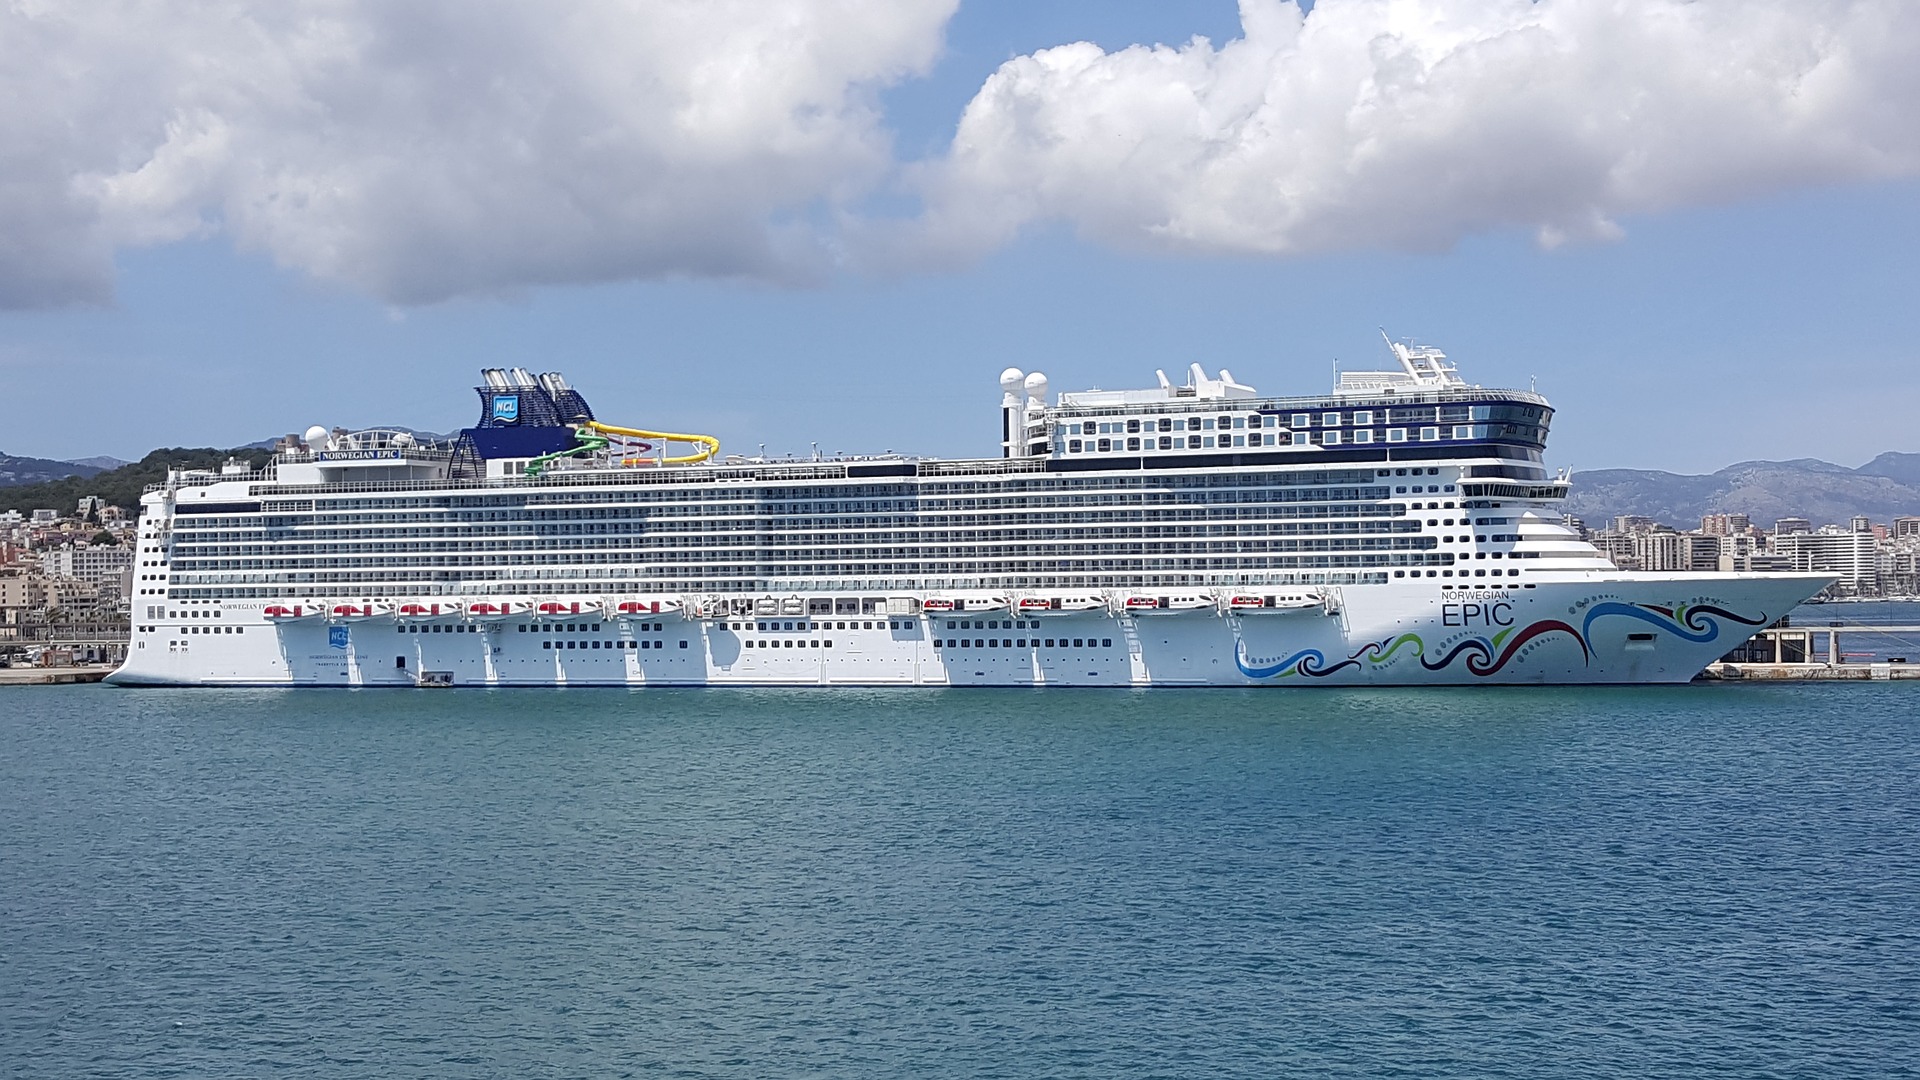 Norwegian Cruise Liner docked at the port